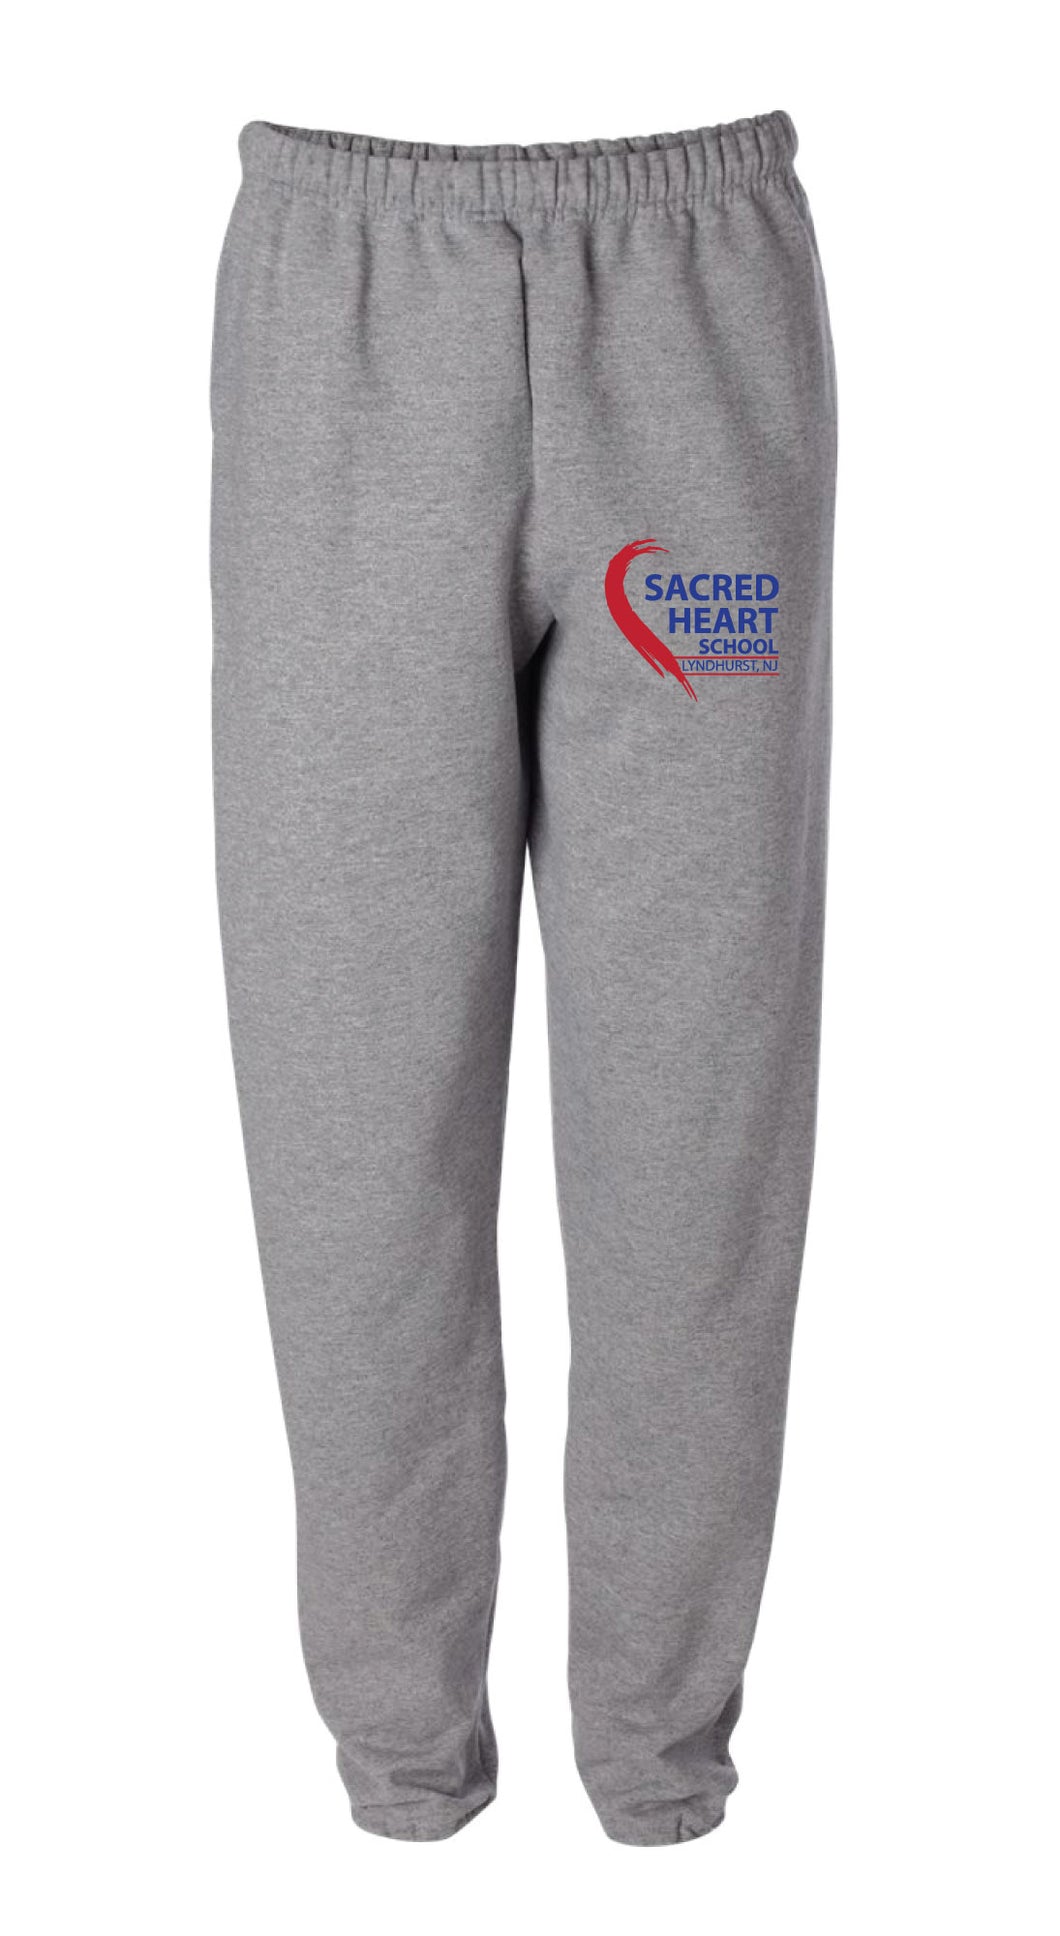 Sacred Heart Cotton Sweatpants - Gray - 5KounT2018